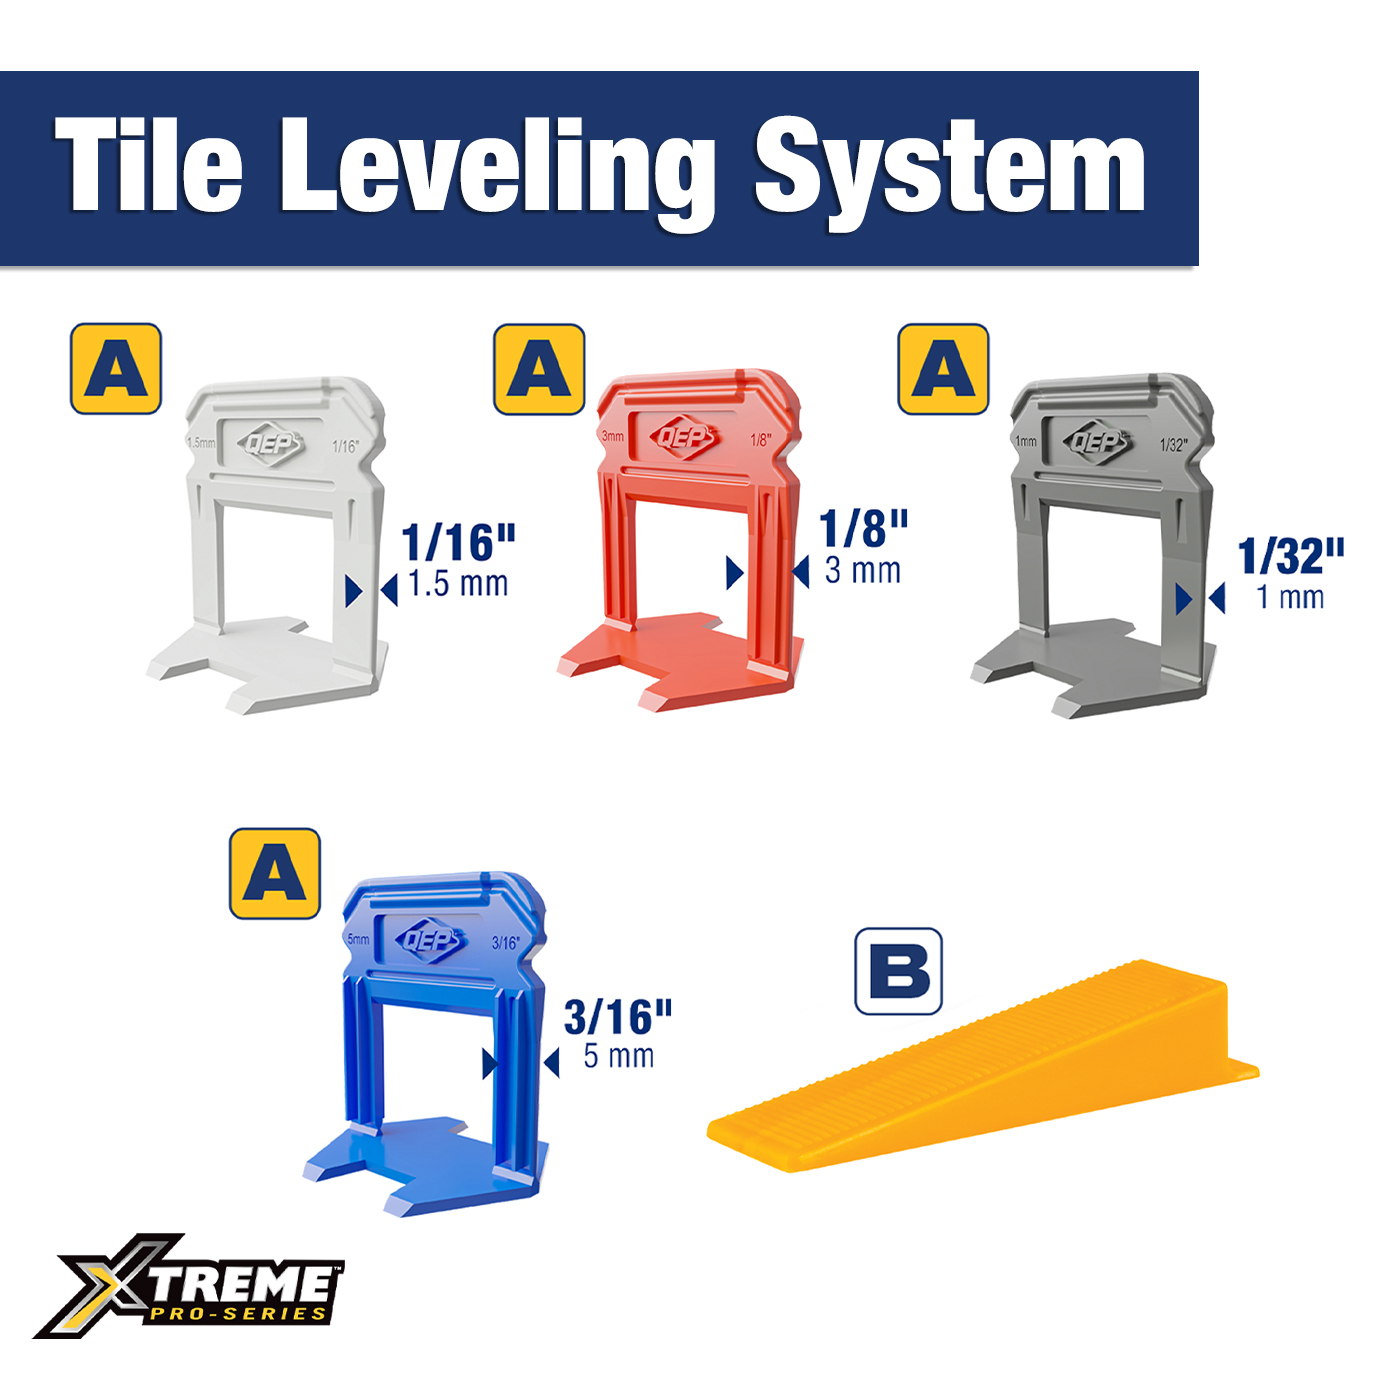 Xtreme Tile Leveling System